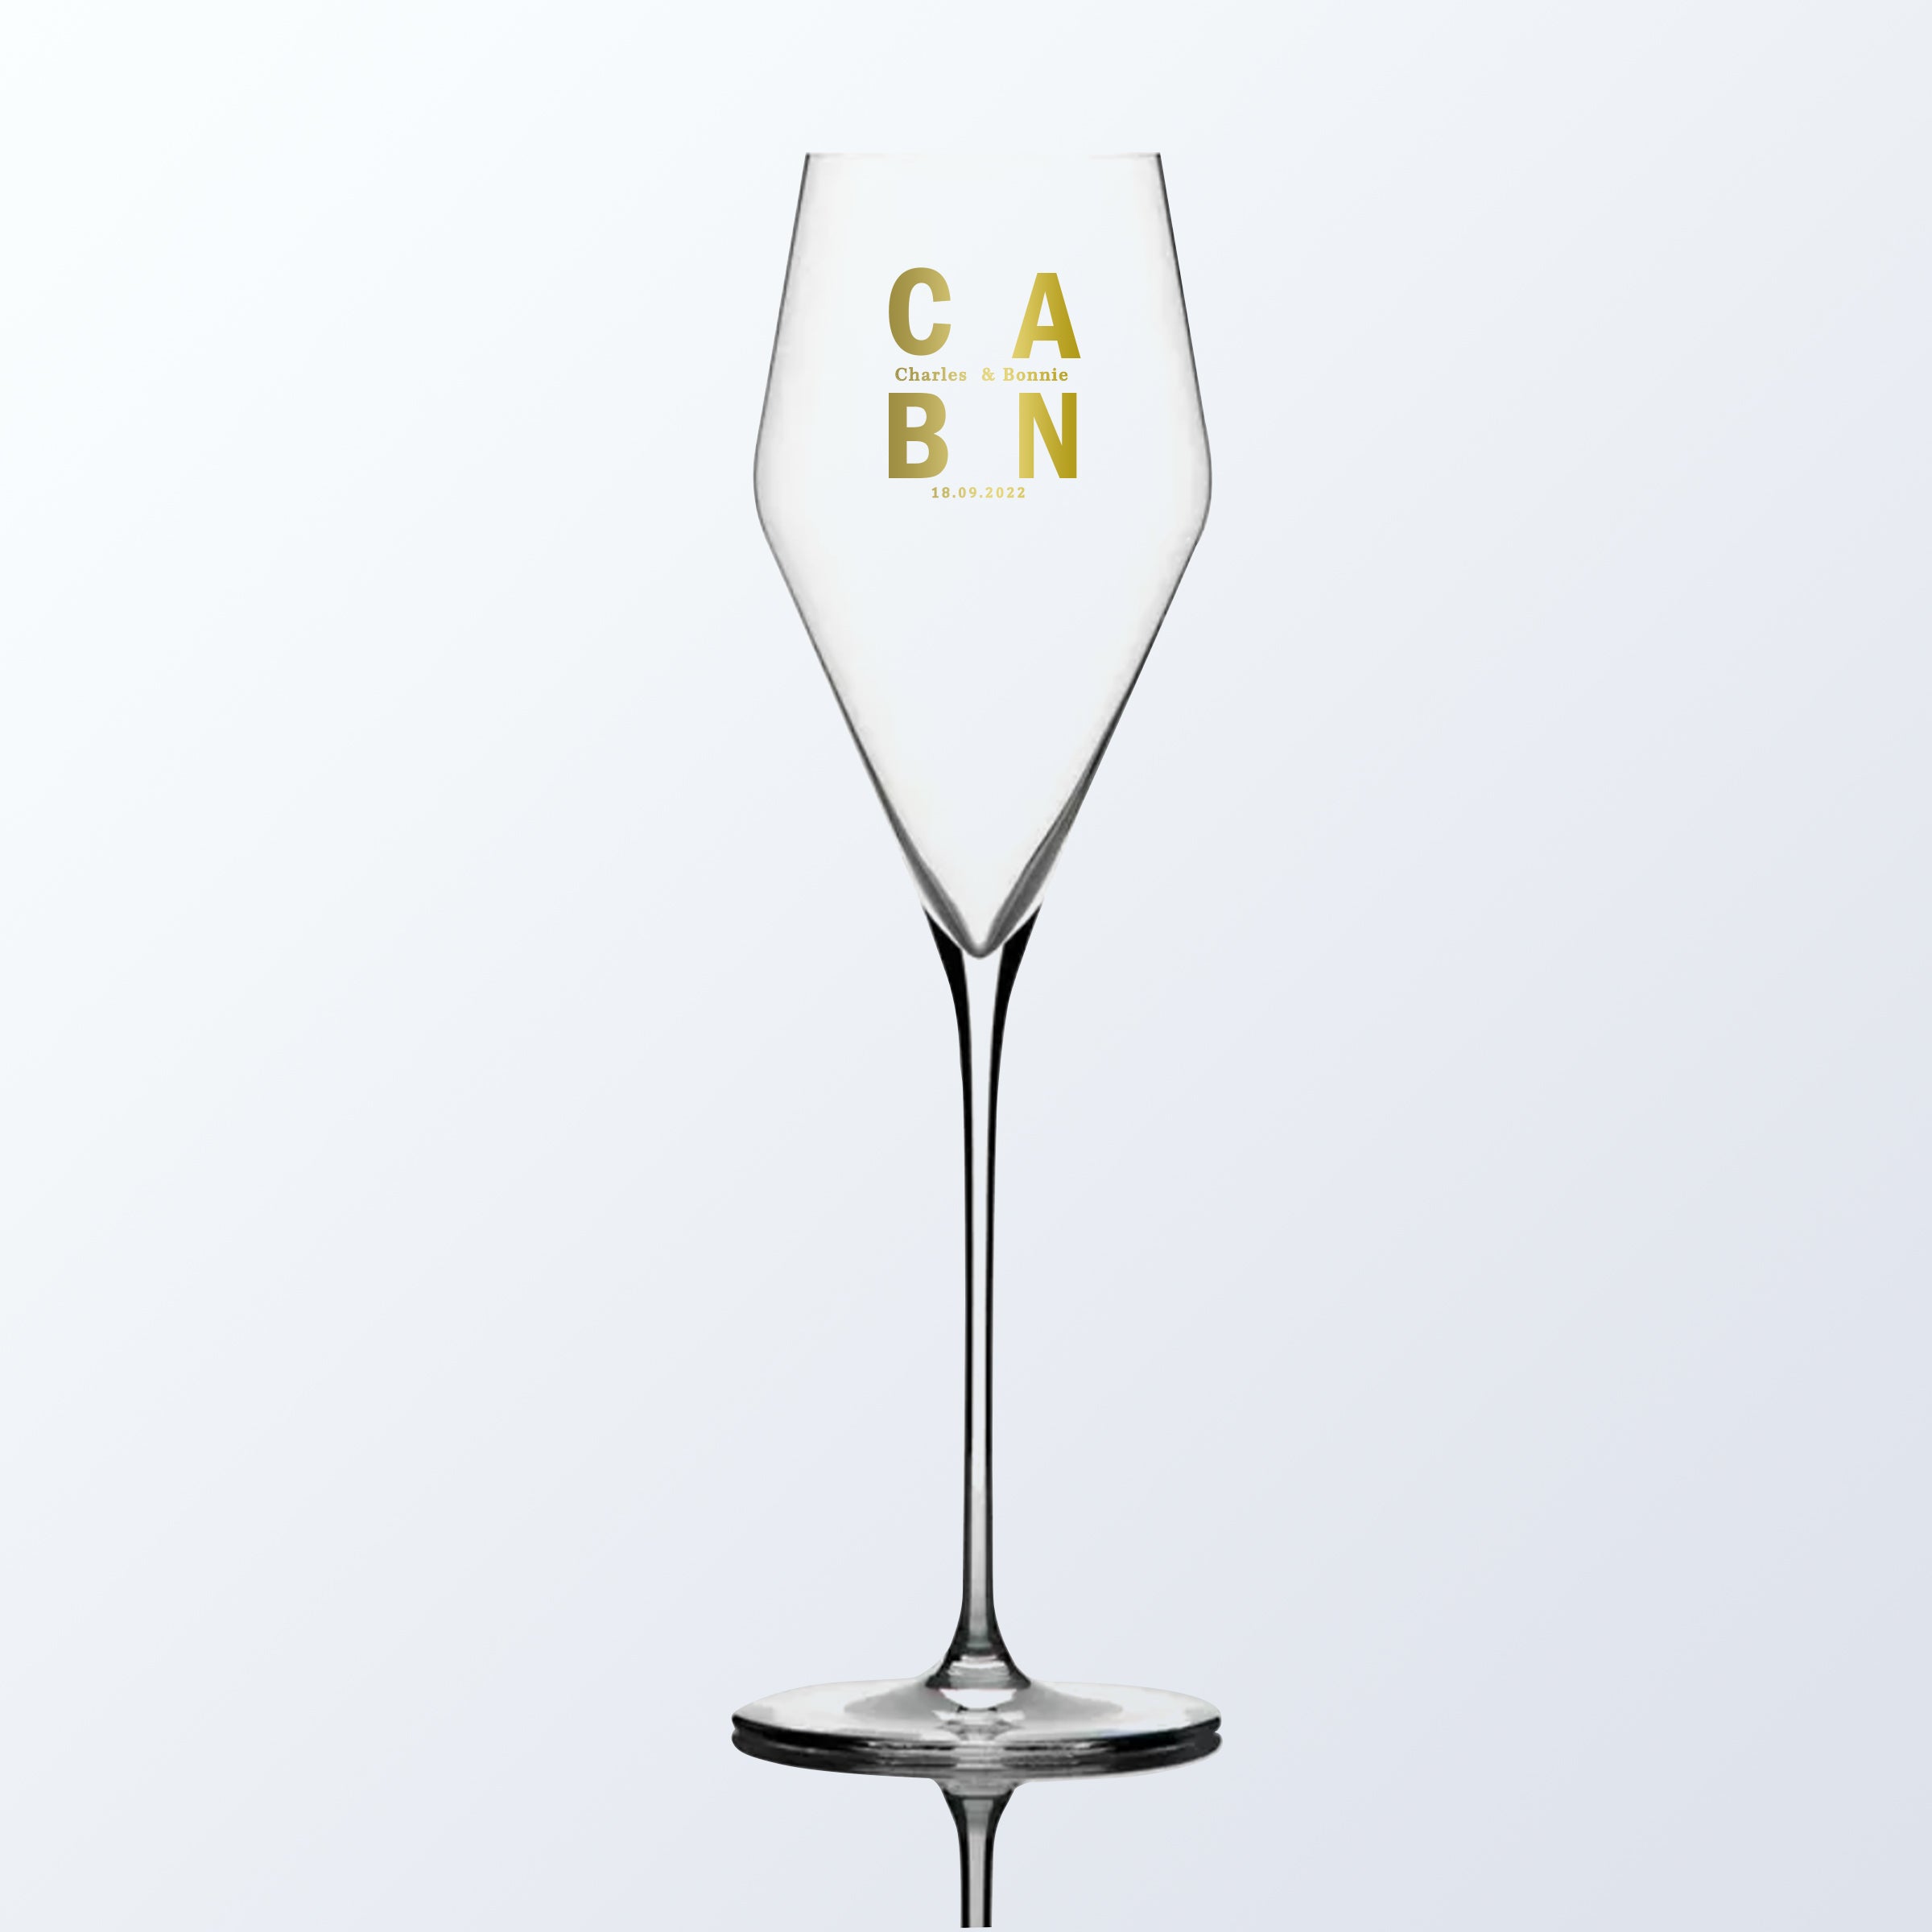 Zalto Glasses|扎爾圖香檳杯 起泡酒杯客製化禮物 - Design Your Own Wine